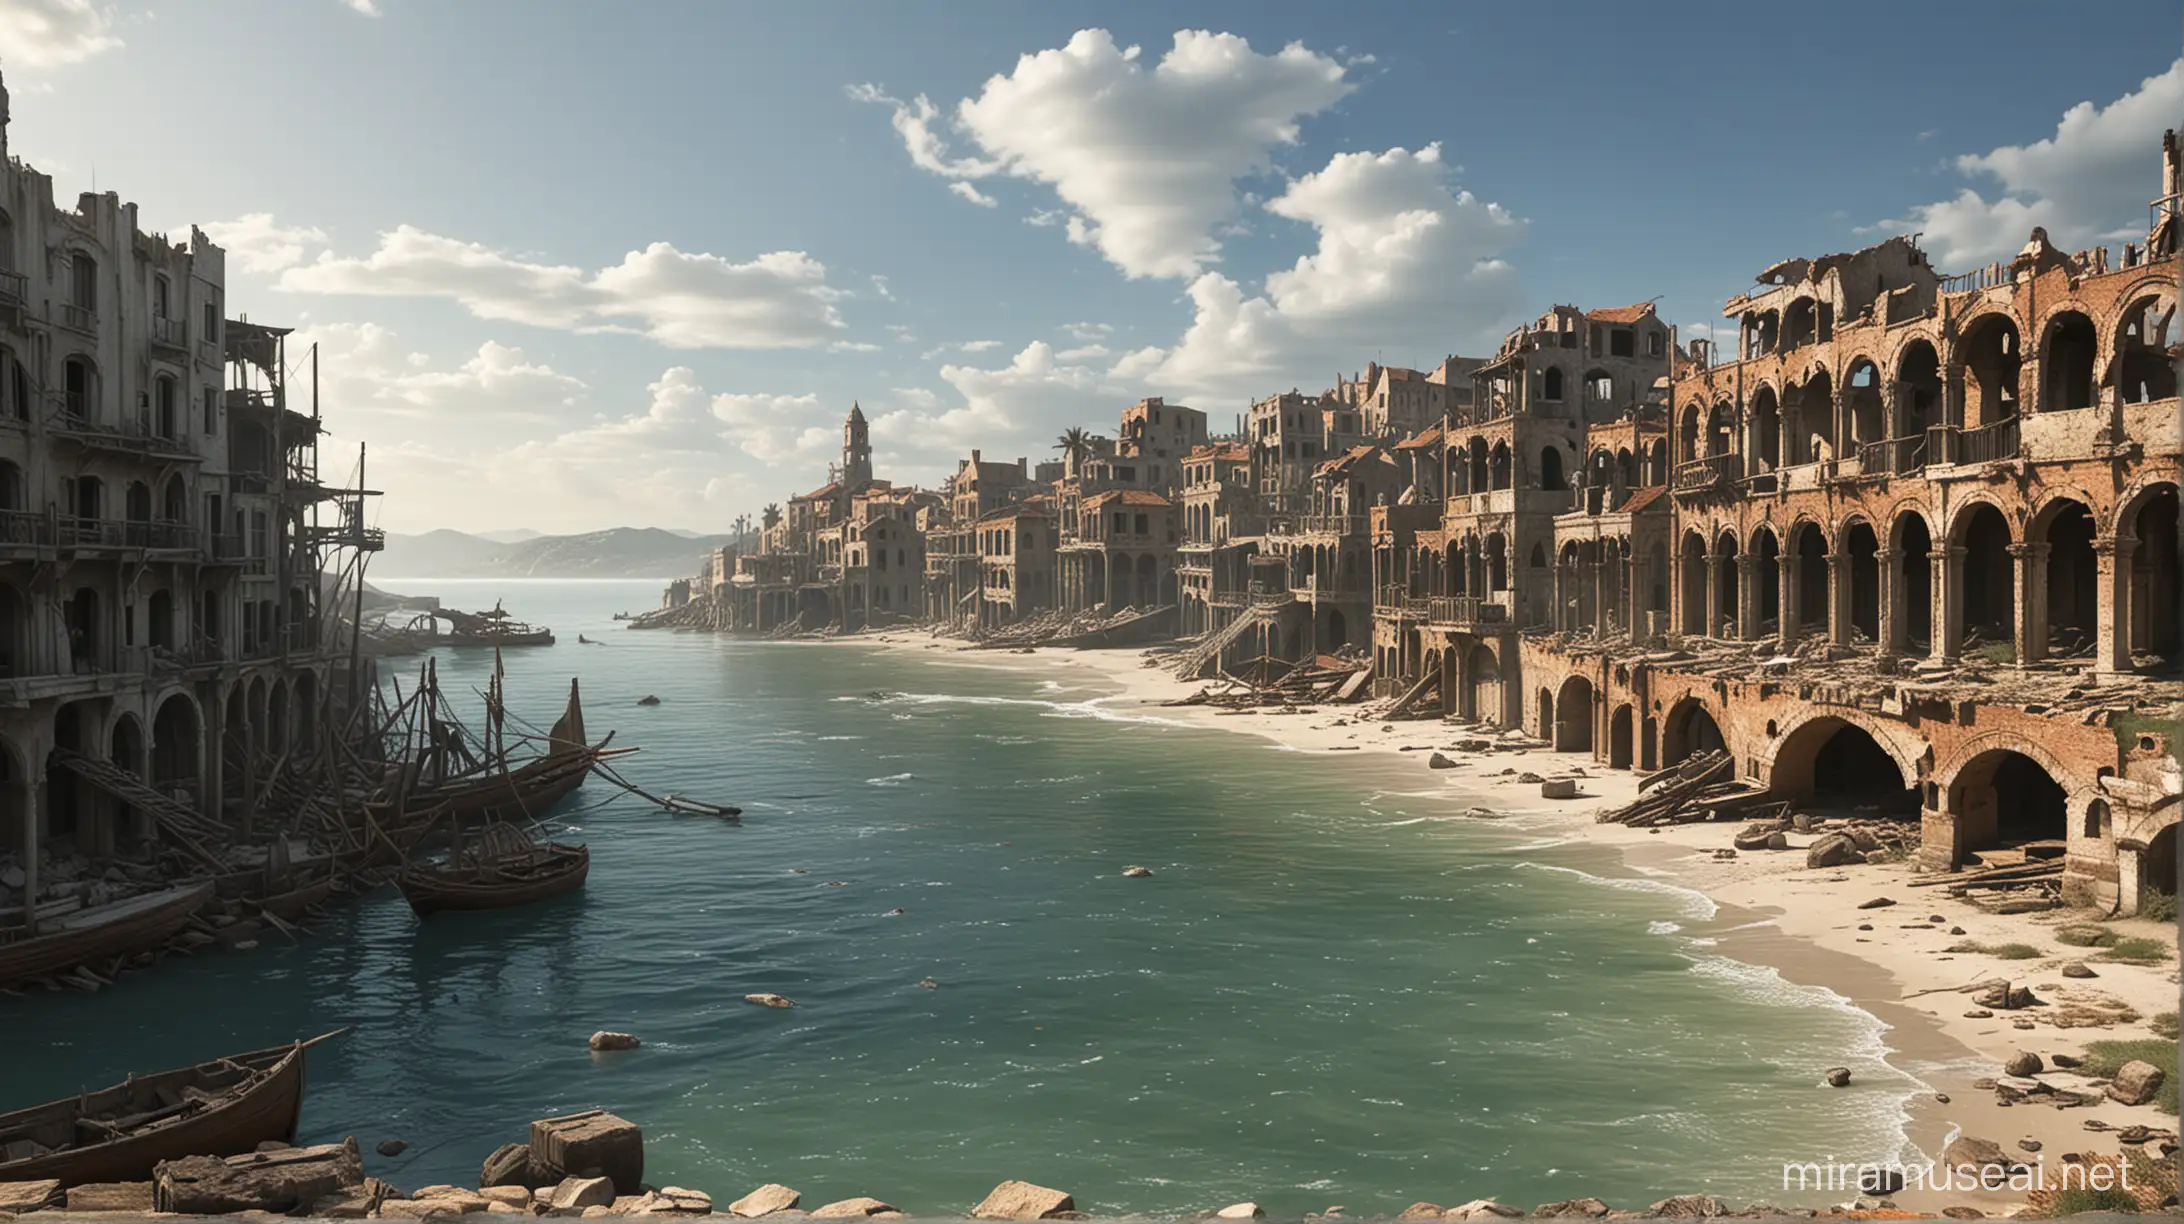 A ruined seaside city
